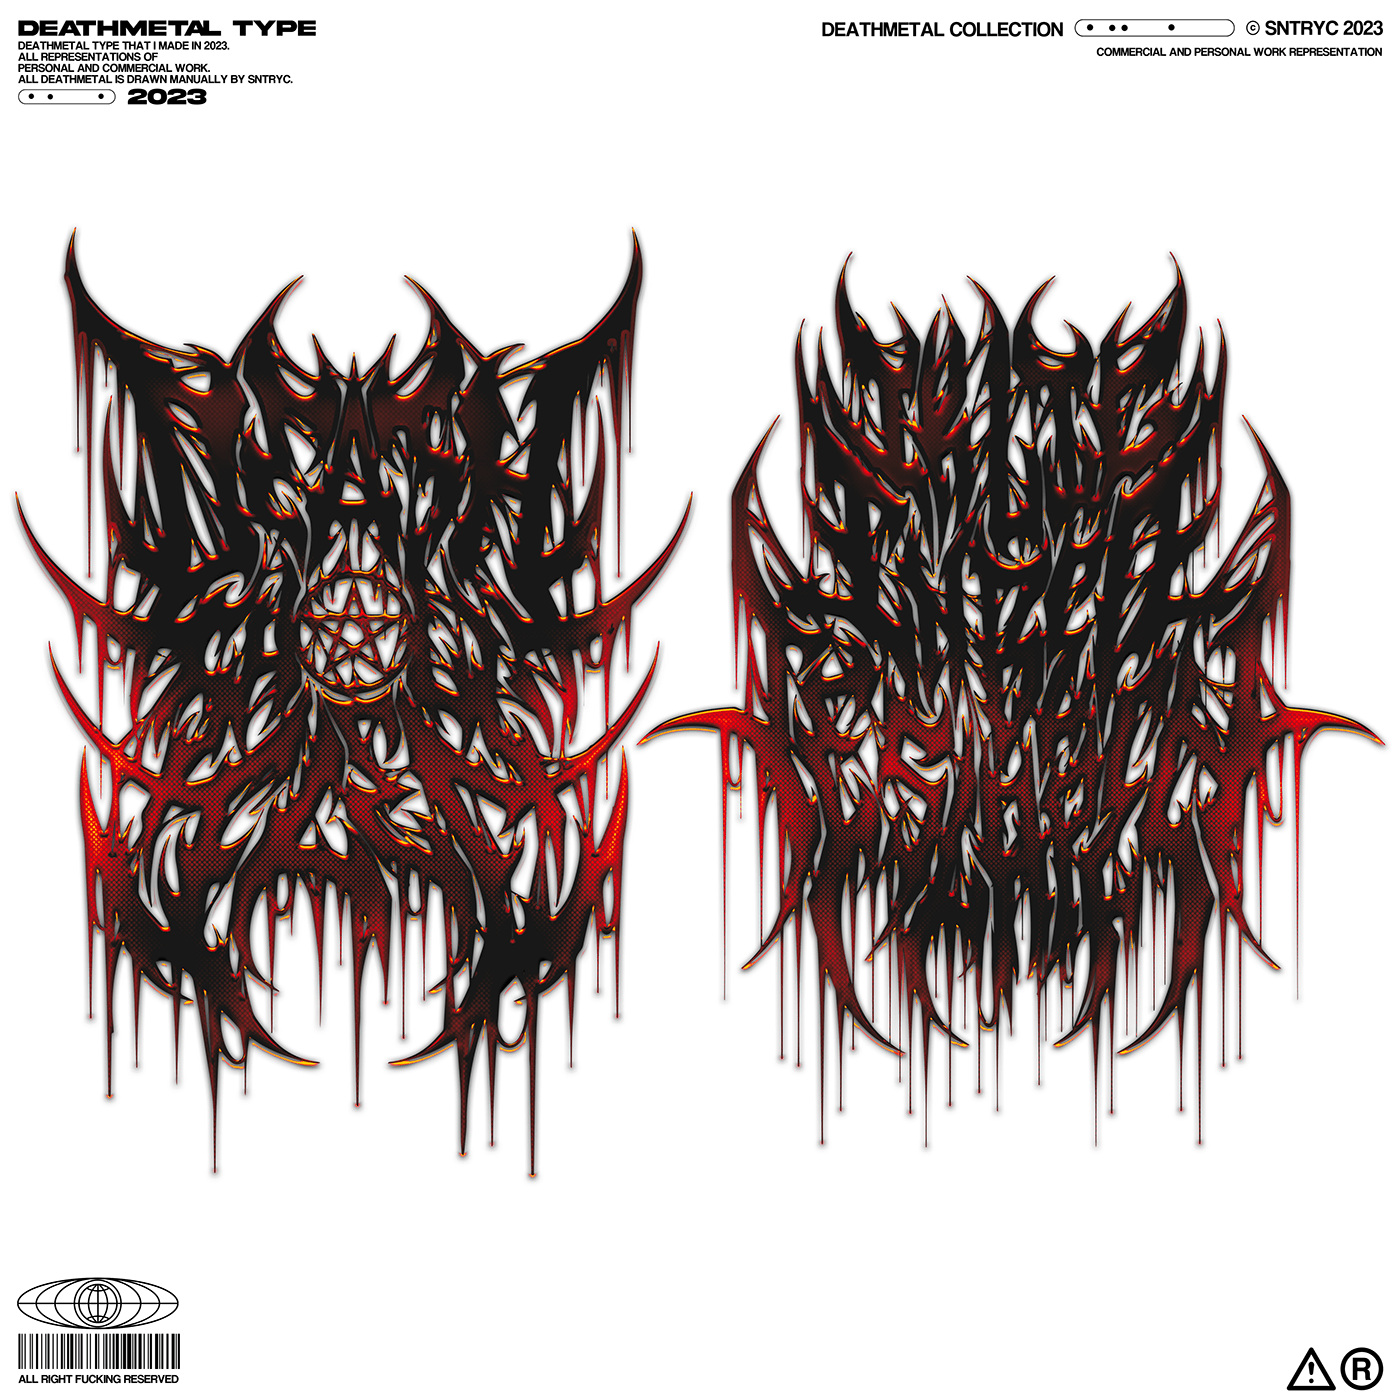 Deathmetal metal rock music artwork Graphic Designer punk Hardcore band cover